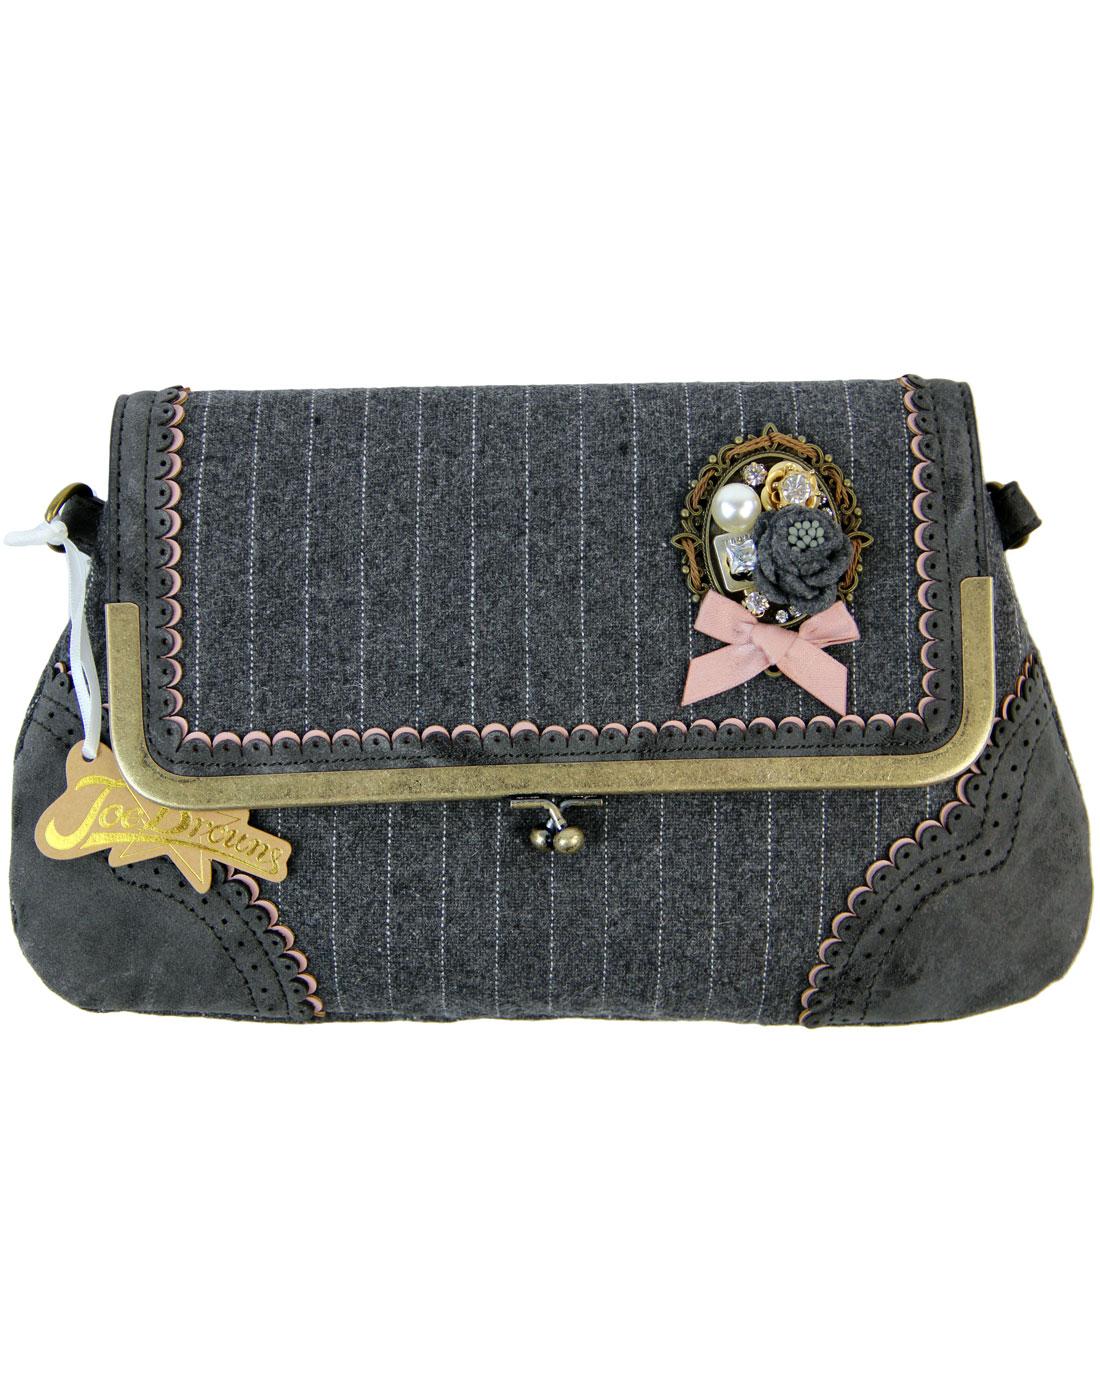 Ambrose Bag JOE BROWNS Vintage Style Handbag 